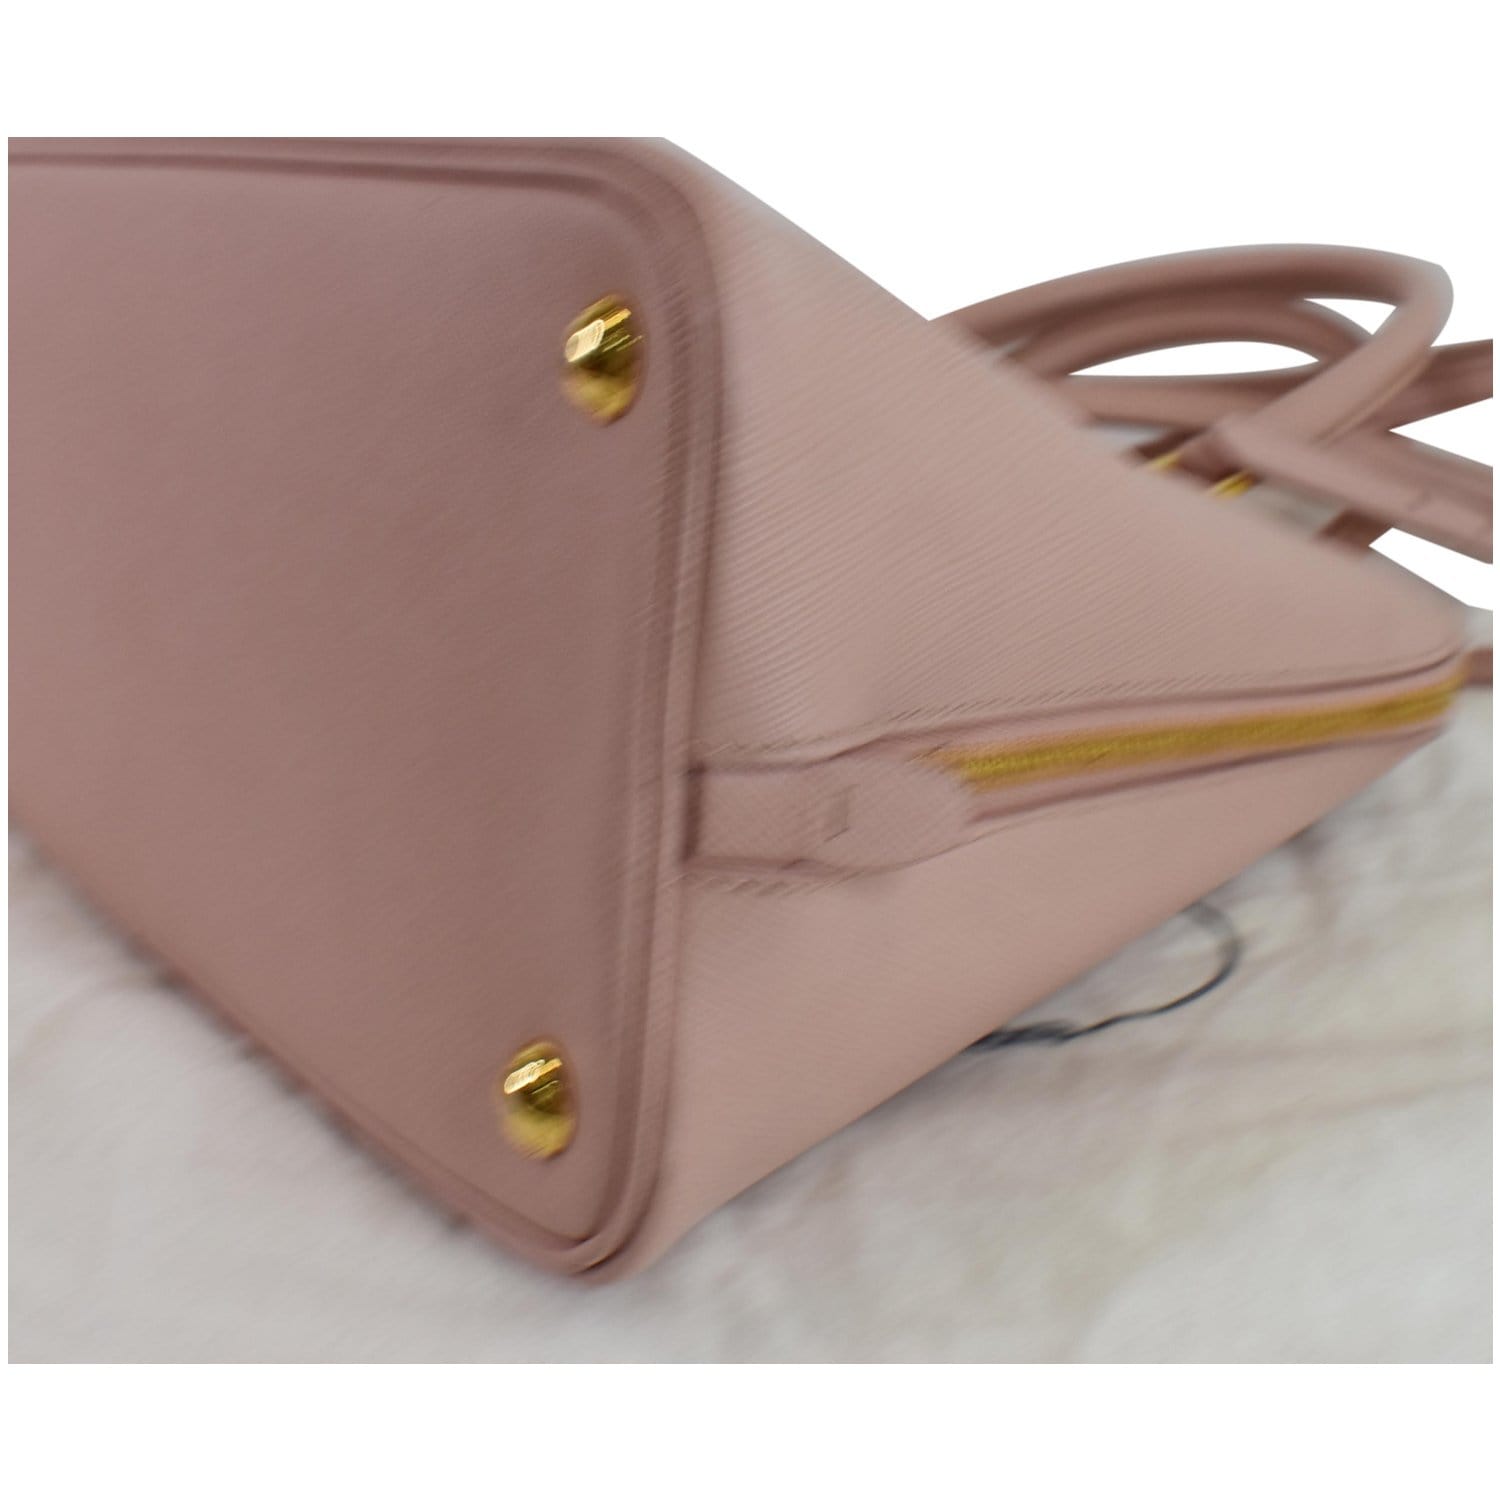 Prada Small Saffiano Lux Promenade Shoulder Bag - Pink Handle Bags,  Handbags - PRA854113